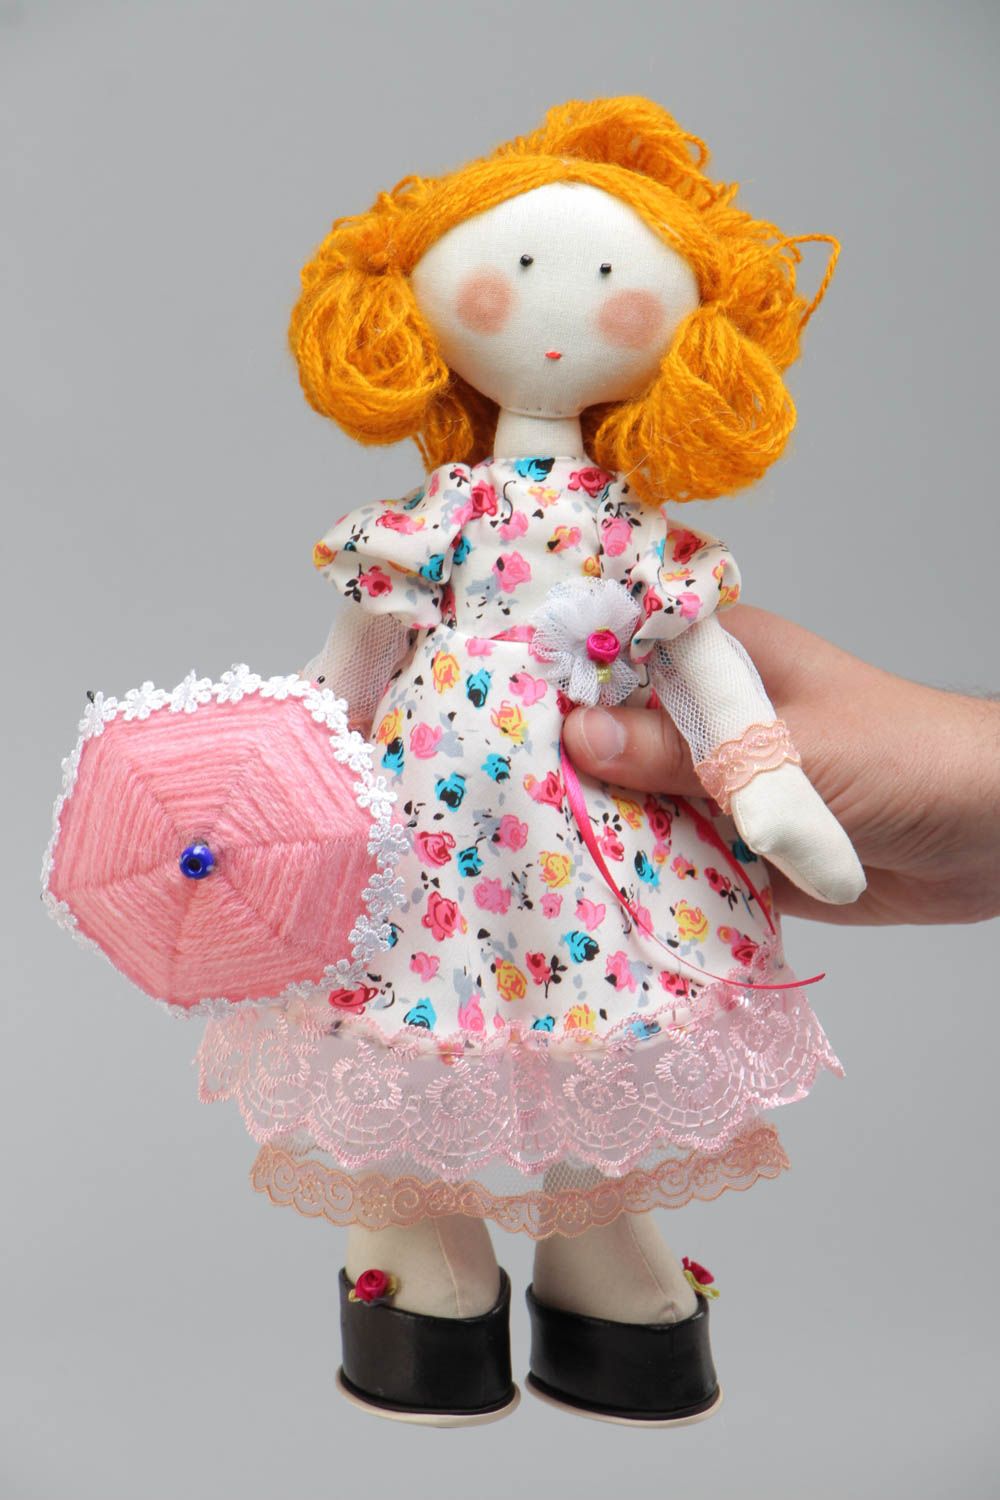 Handmade designer soft doll with umbrella interior toy made of cotton and satin photo 4